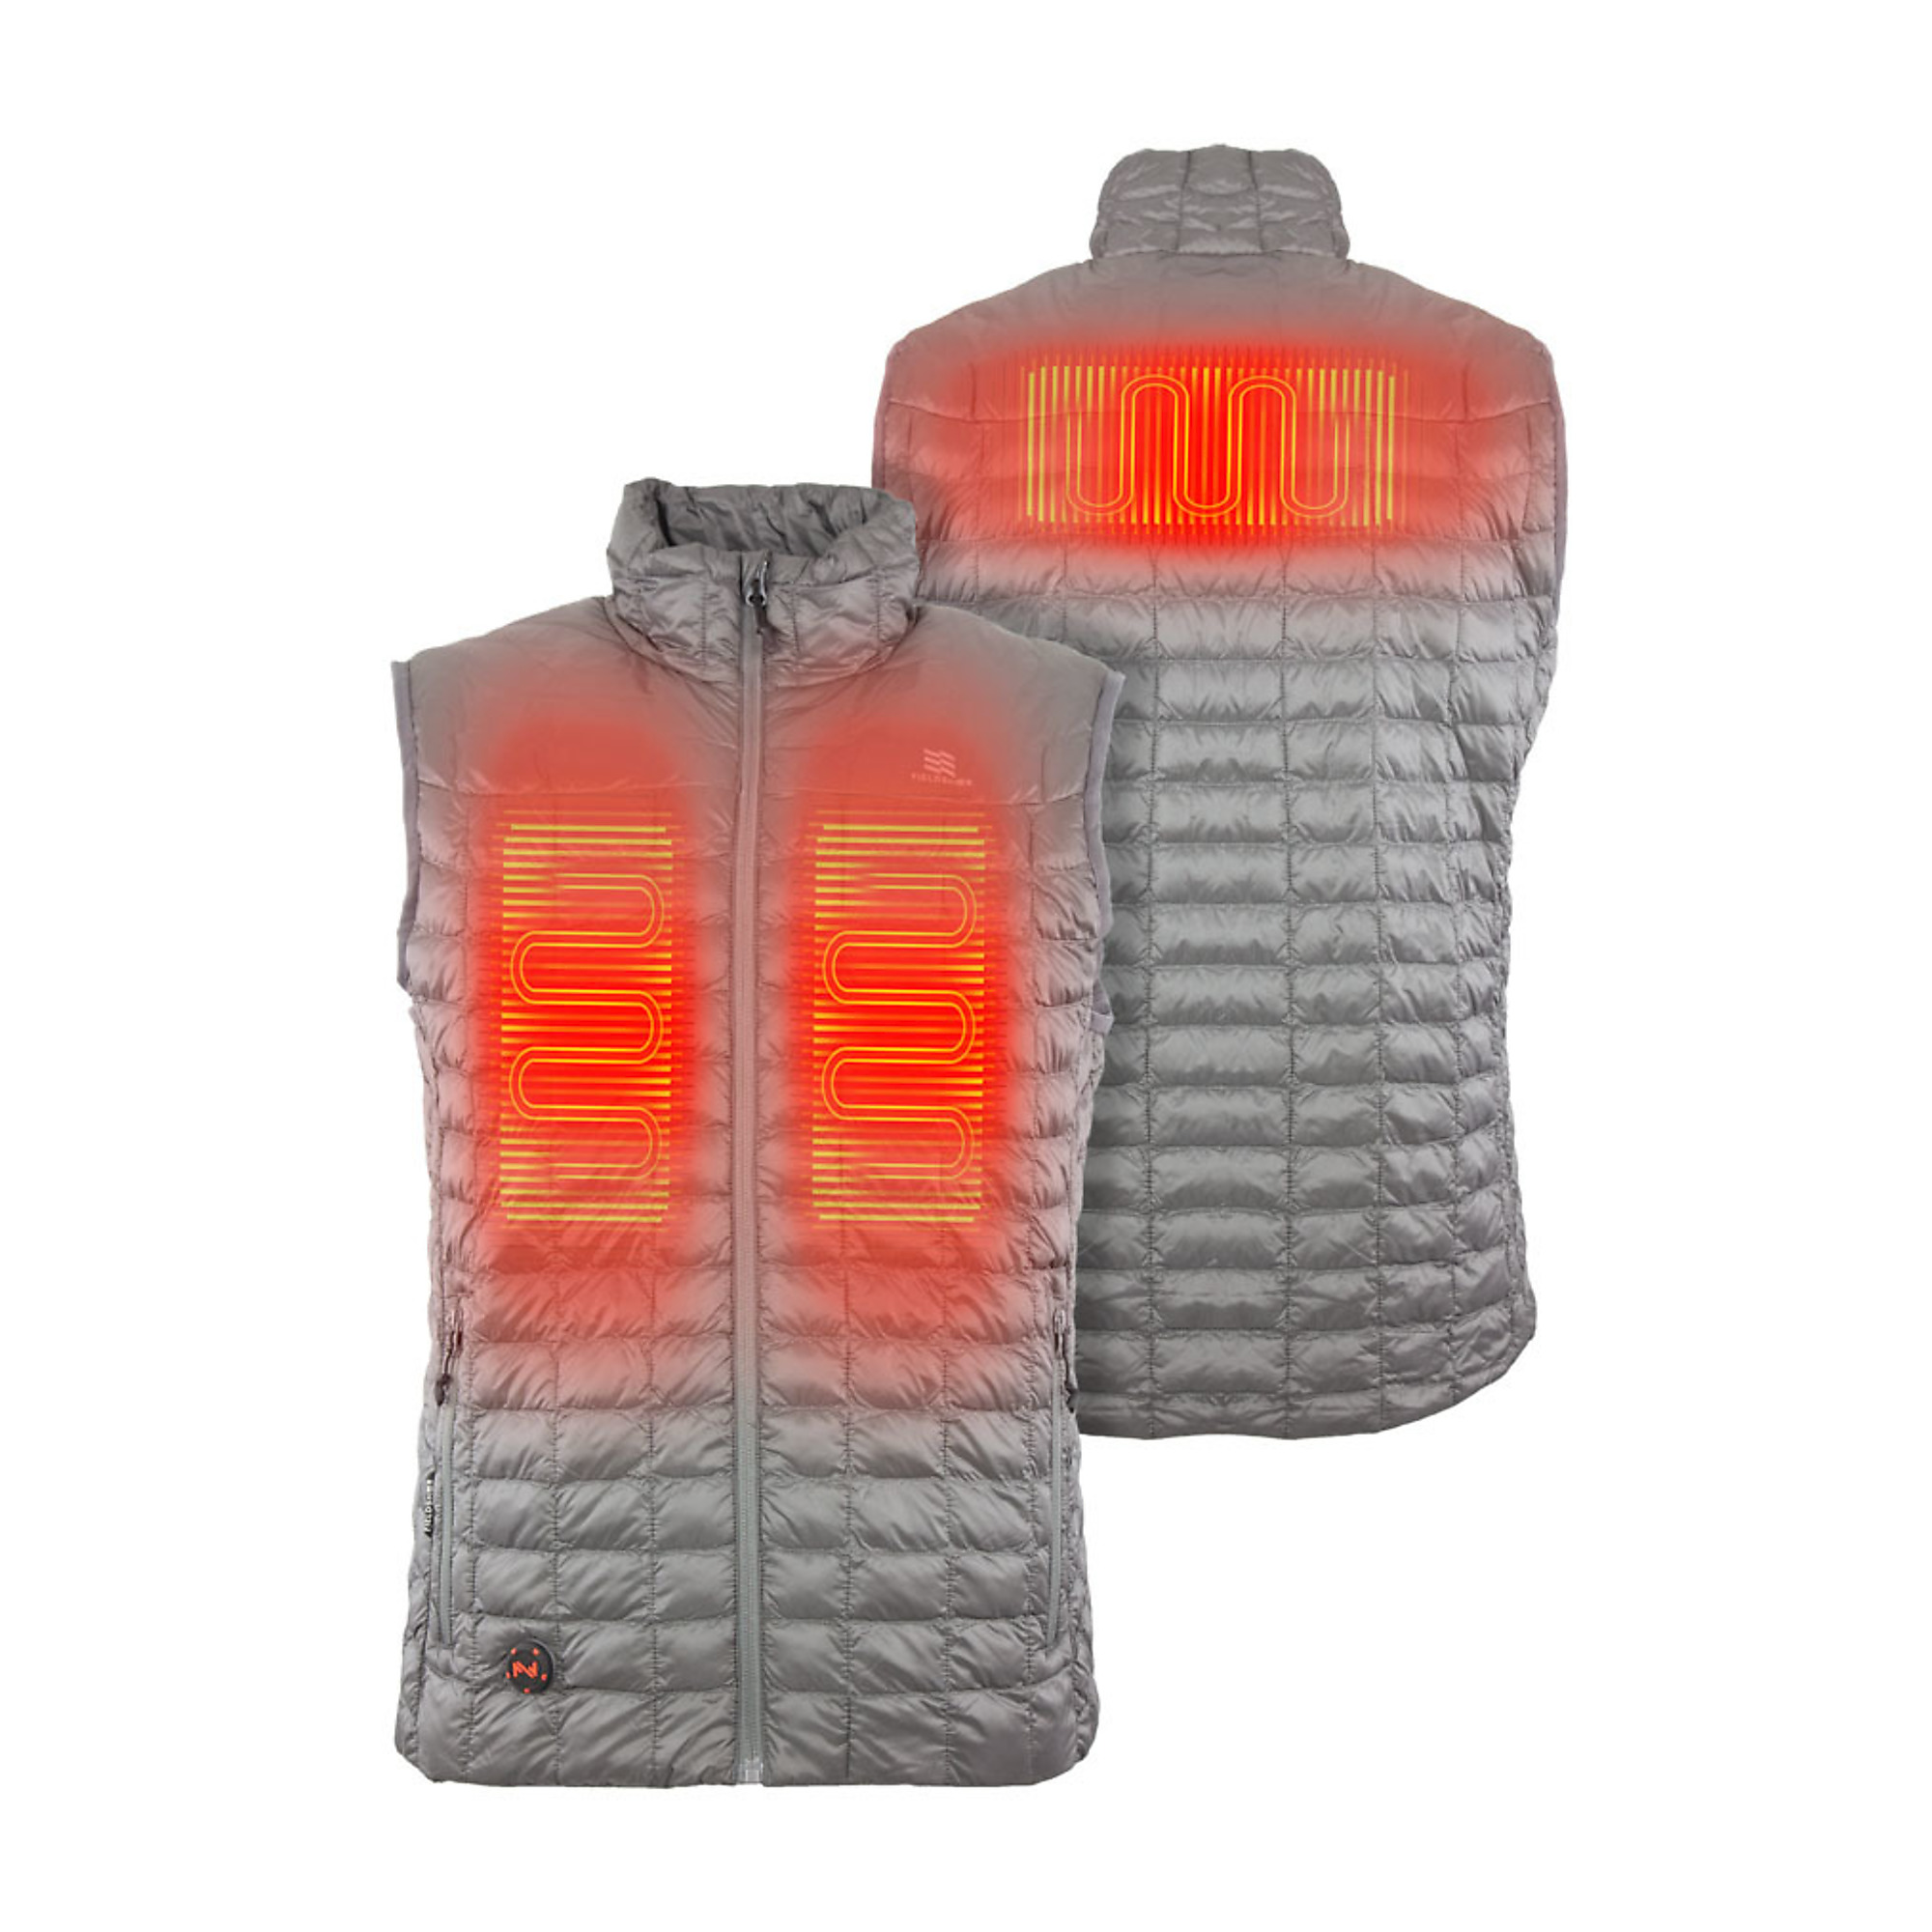 Fieldsheer, Men's Backcountry Heated Vest with 7.4v Battery, Size XL, Color Grey, Model MWMV04320520